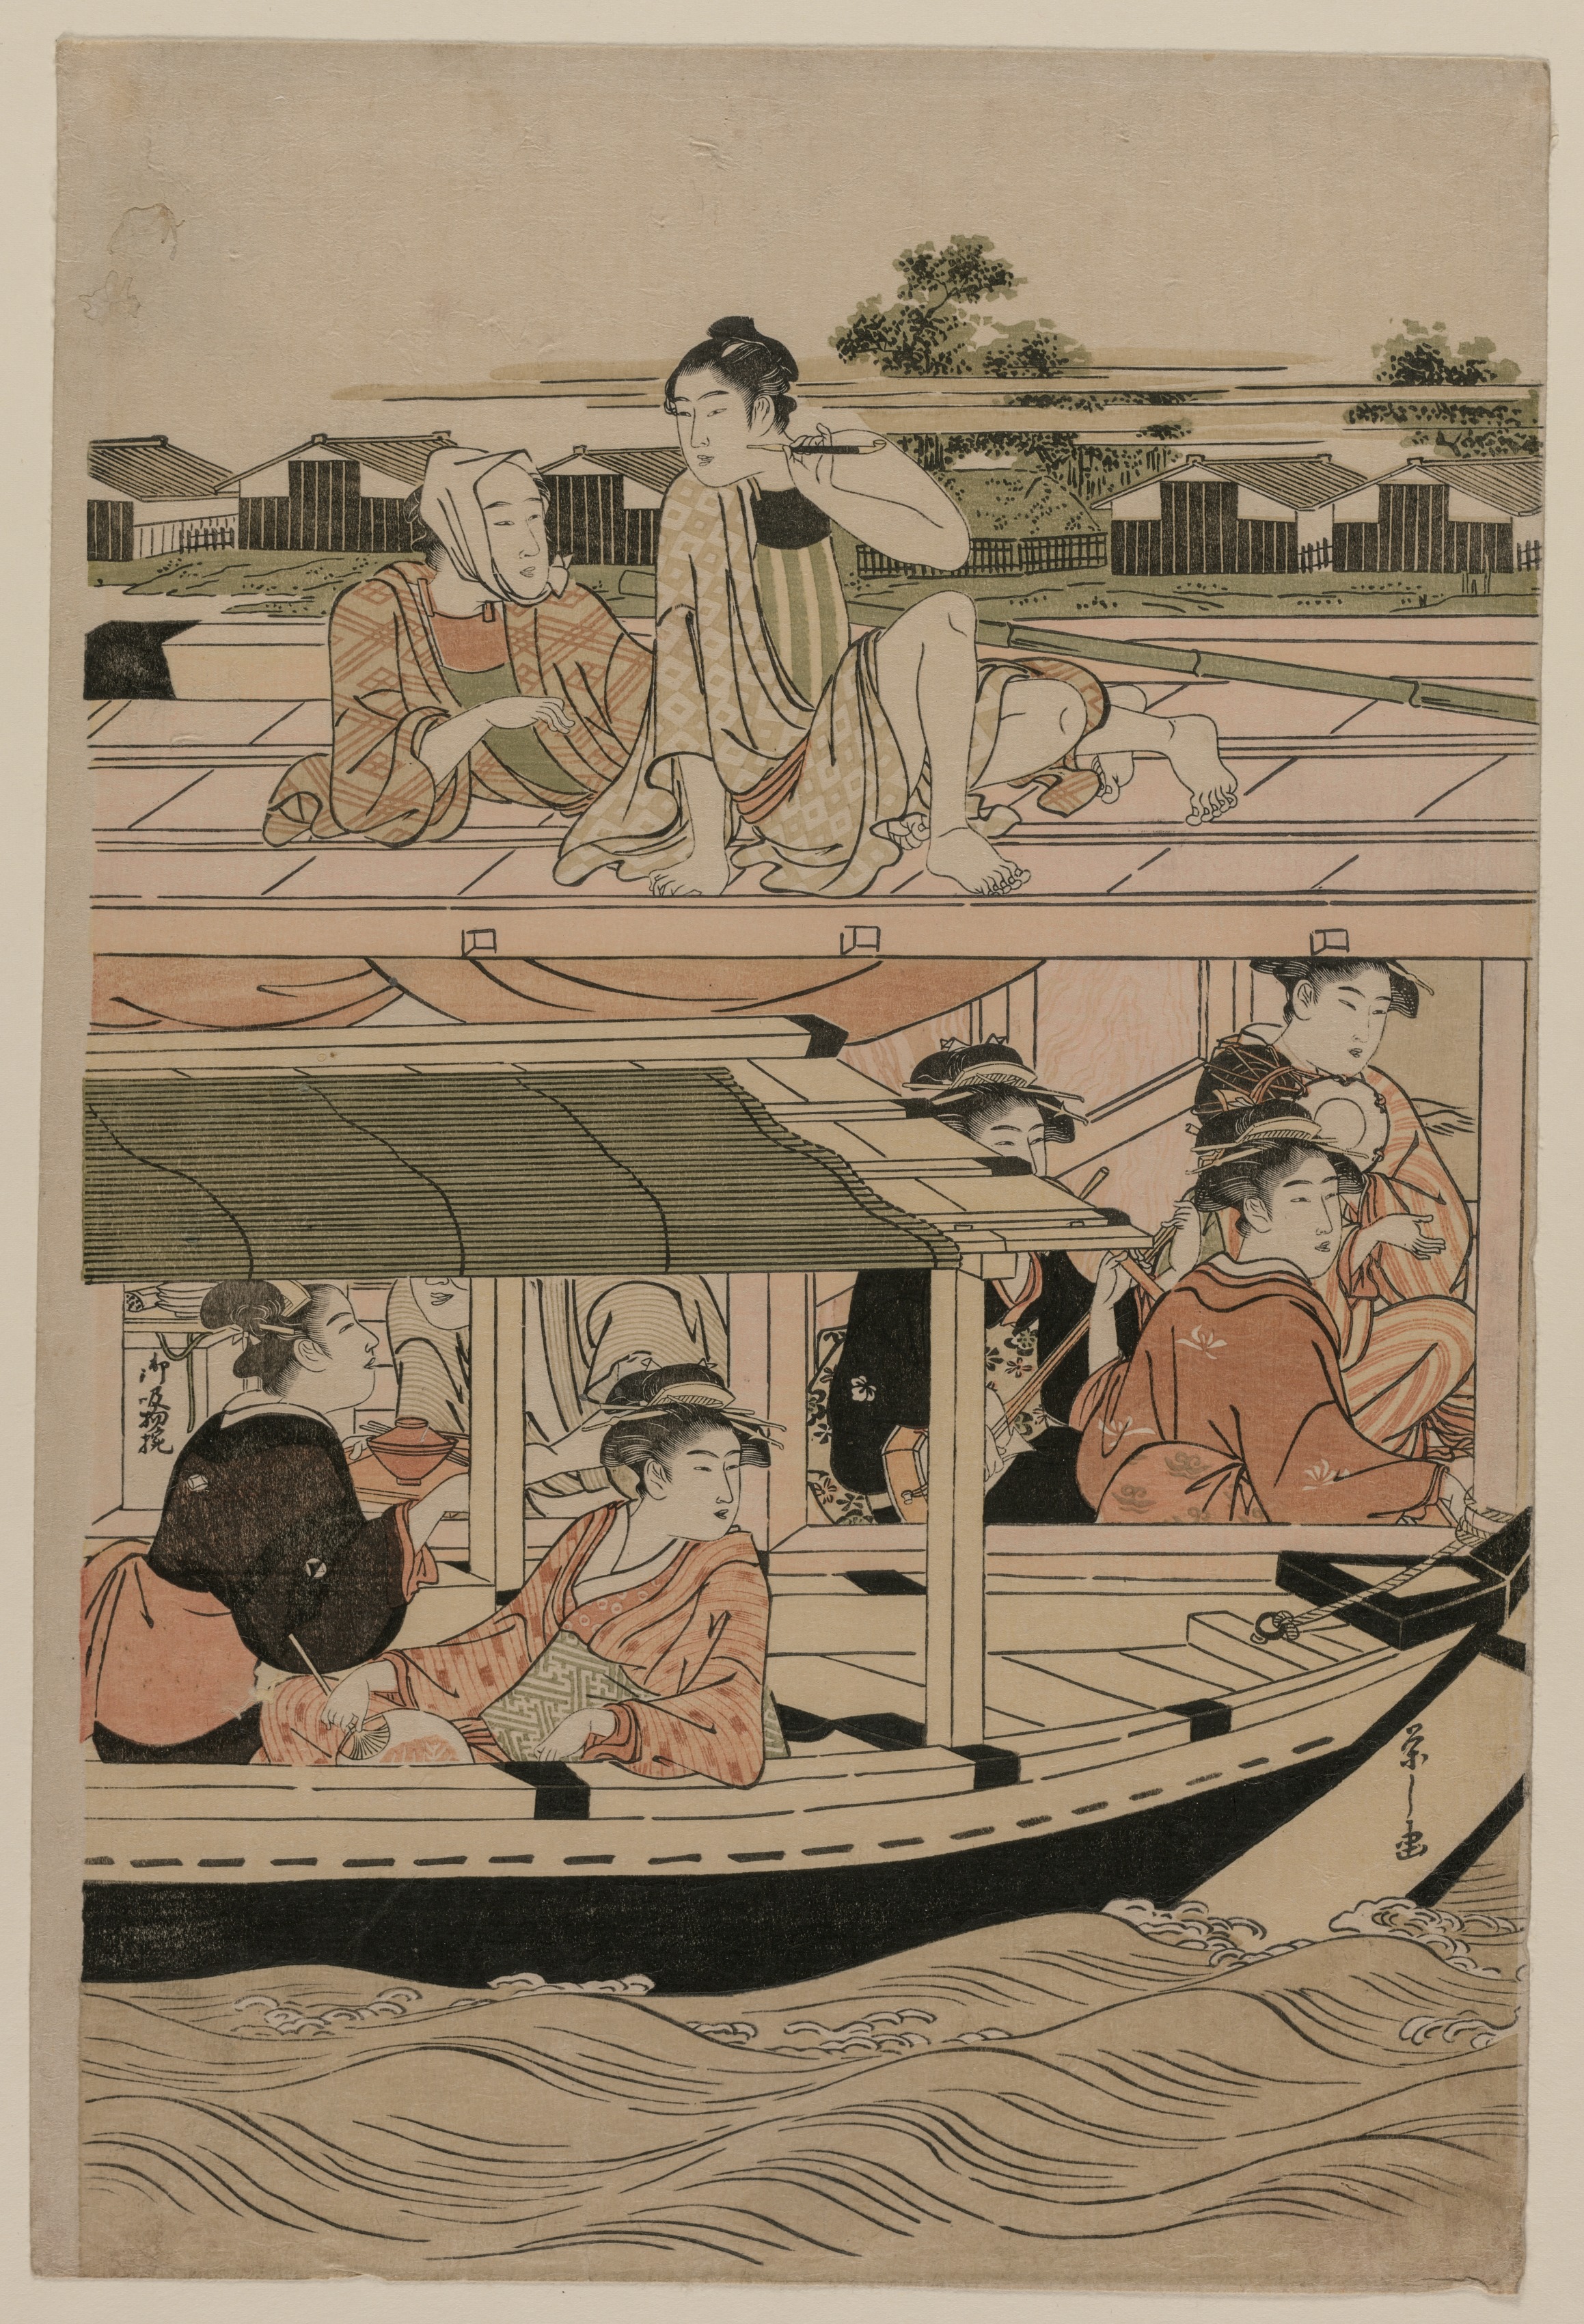 Print from Pleasure Boats on the Sumida River beneath Shin-Ōhashi Bridge